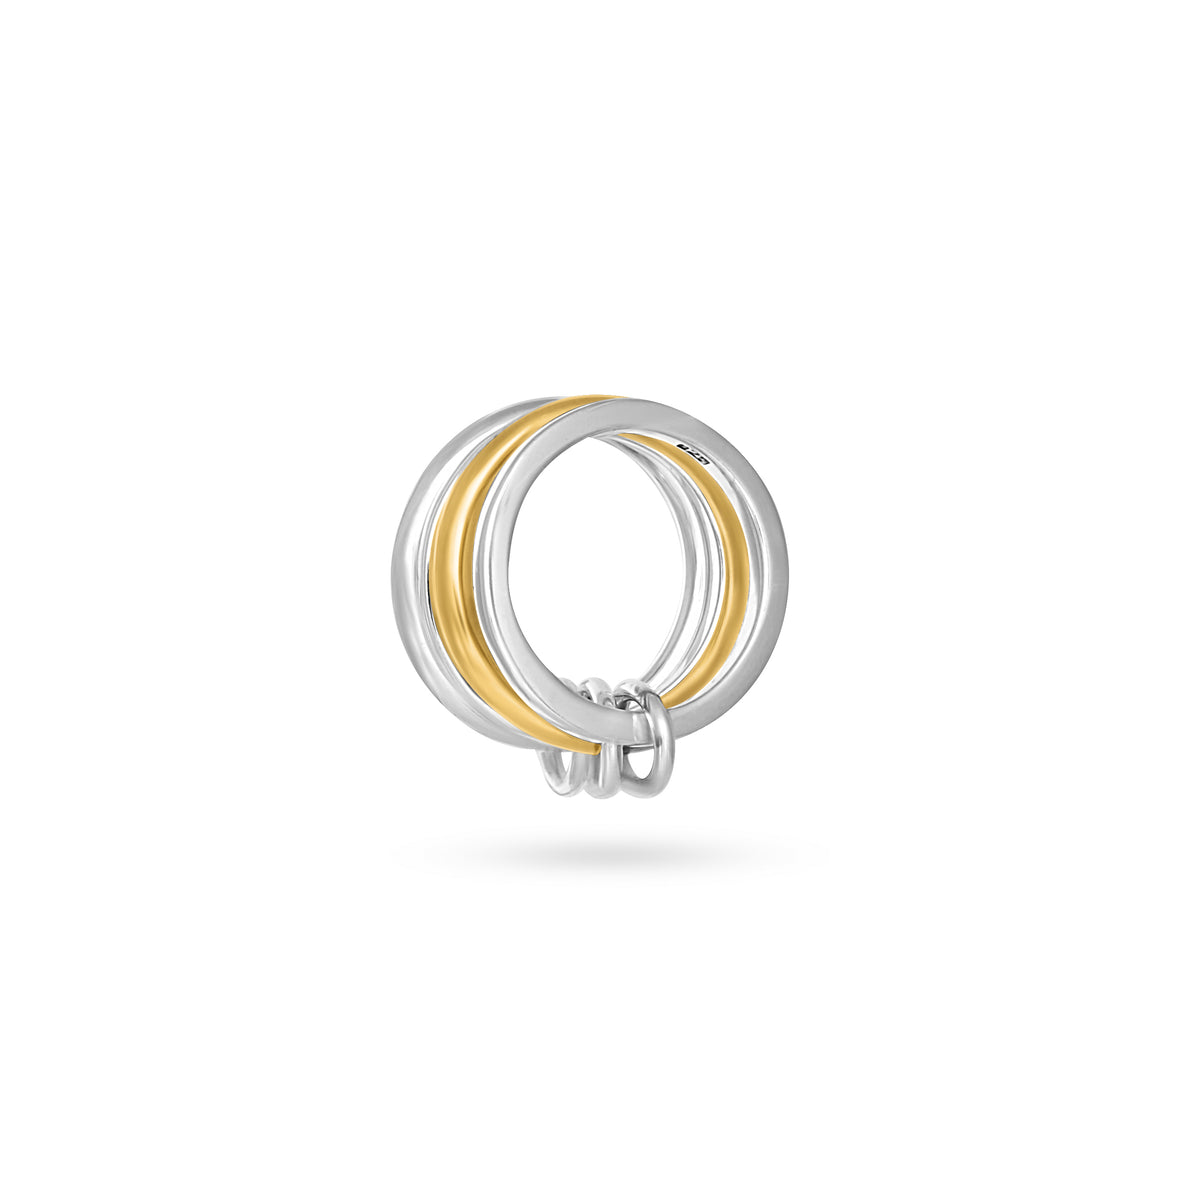 VIKA jewels quad interlock ring combination recycled recycling sterling silver silber schmuck jewelry jewellery handmade handgemacht bali berlin nachhaltig sustainable gold vergoldet mix plated 18 karat carat